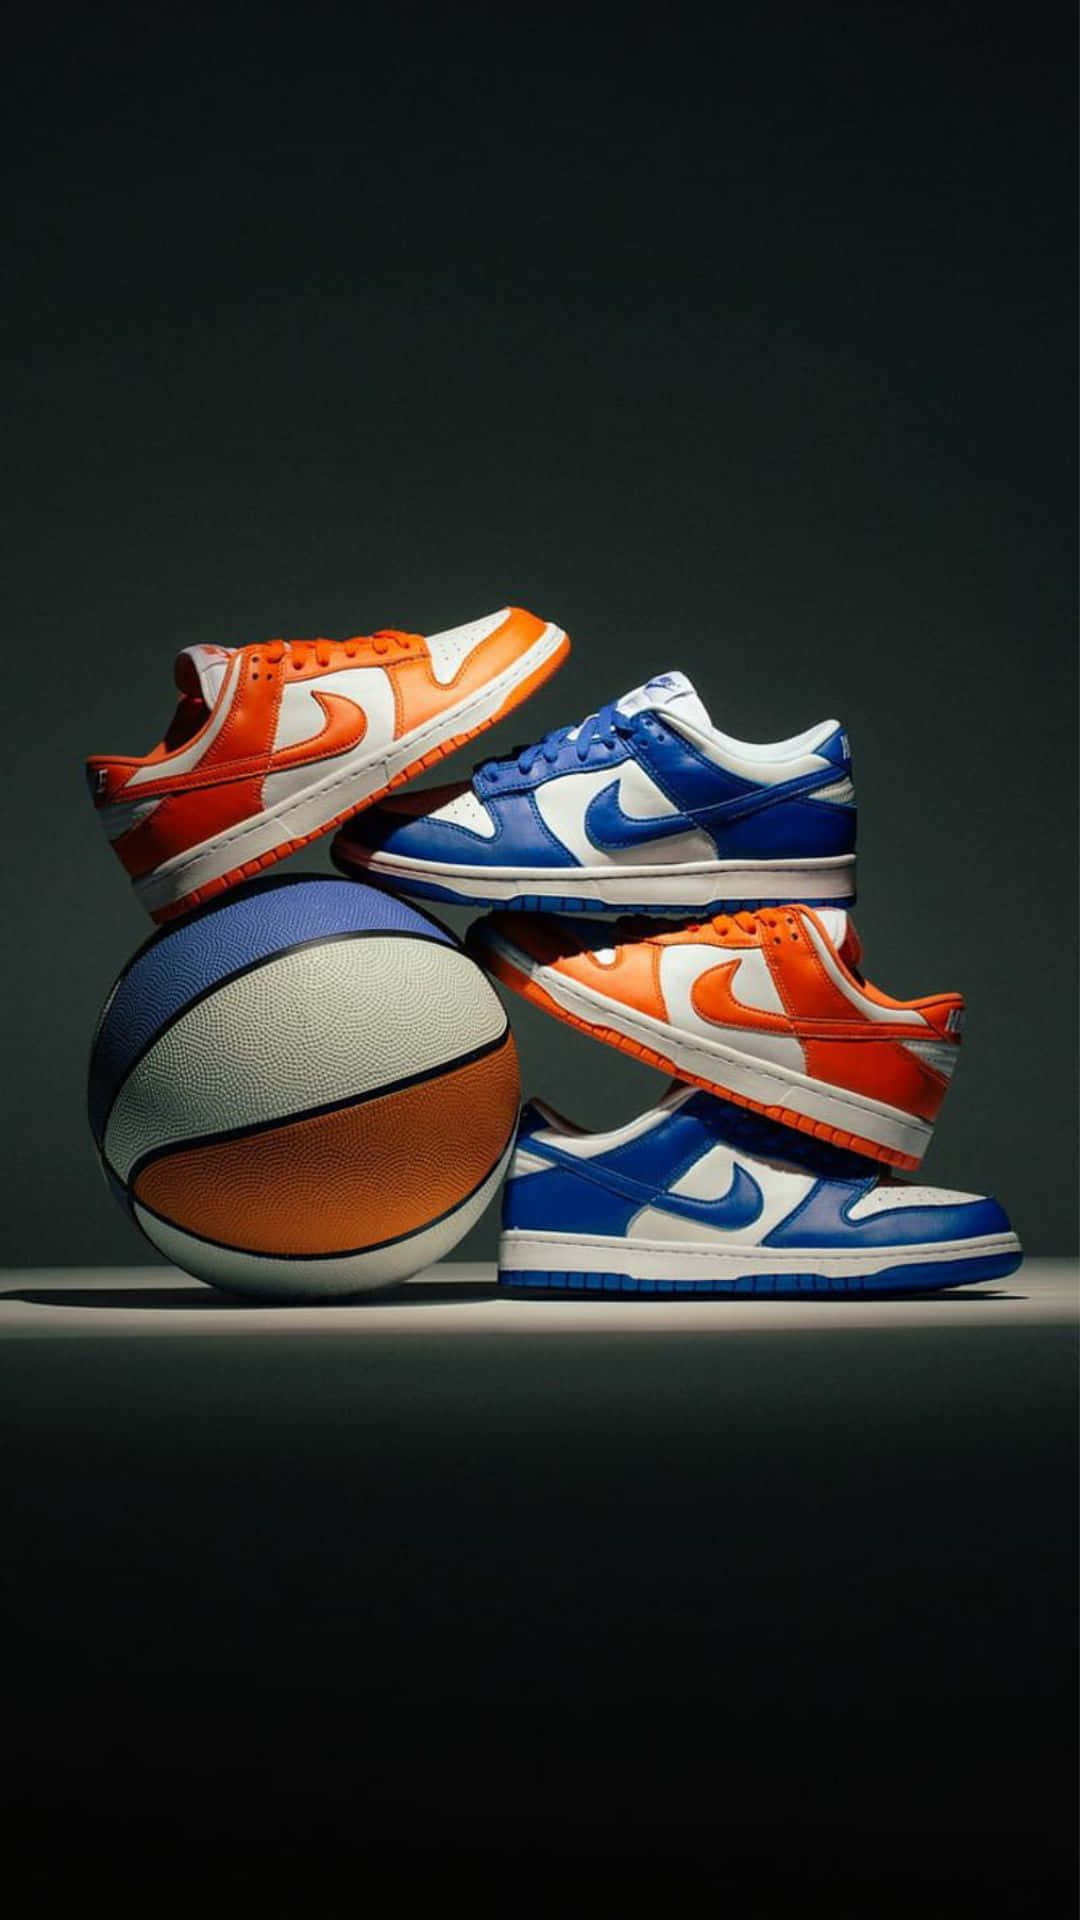 Sleek Performance - Modern Basketball Shoes Wallpaper